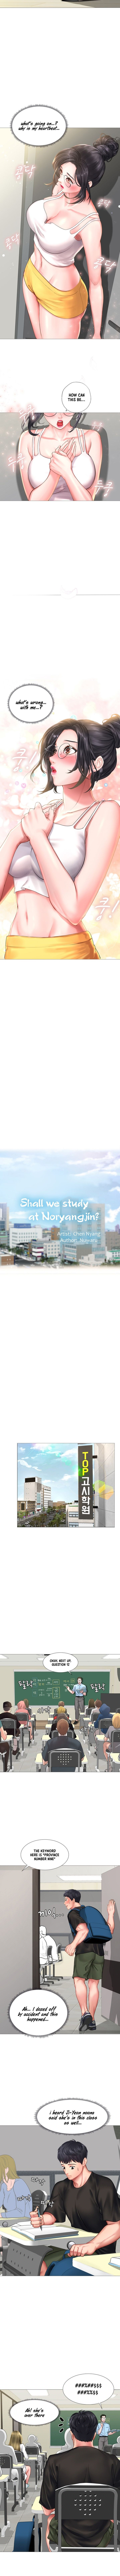 Should I Study at Noryangjin? - Chapter 24 Page 3